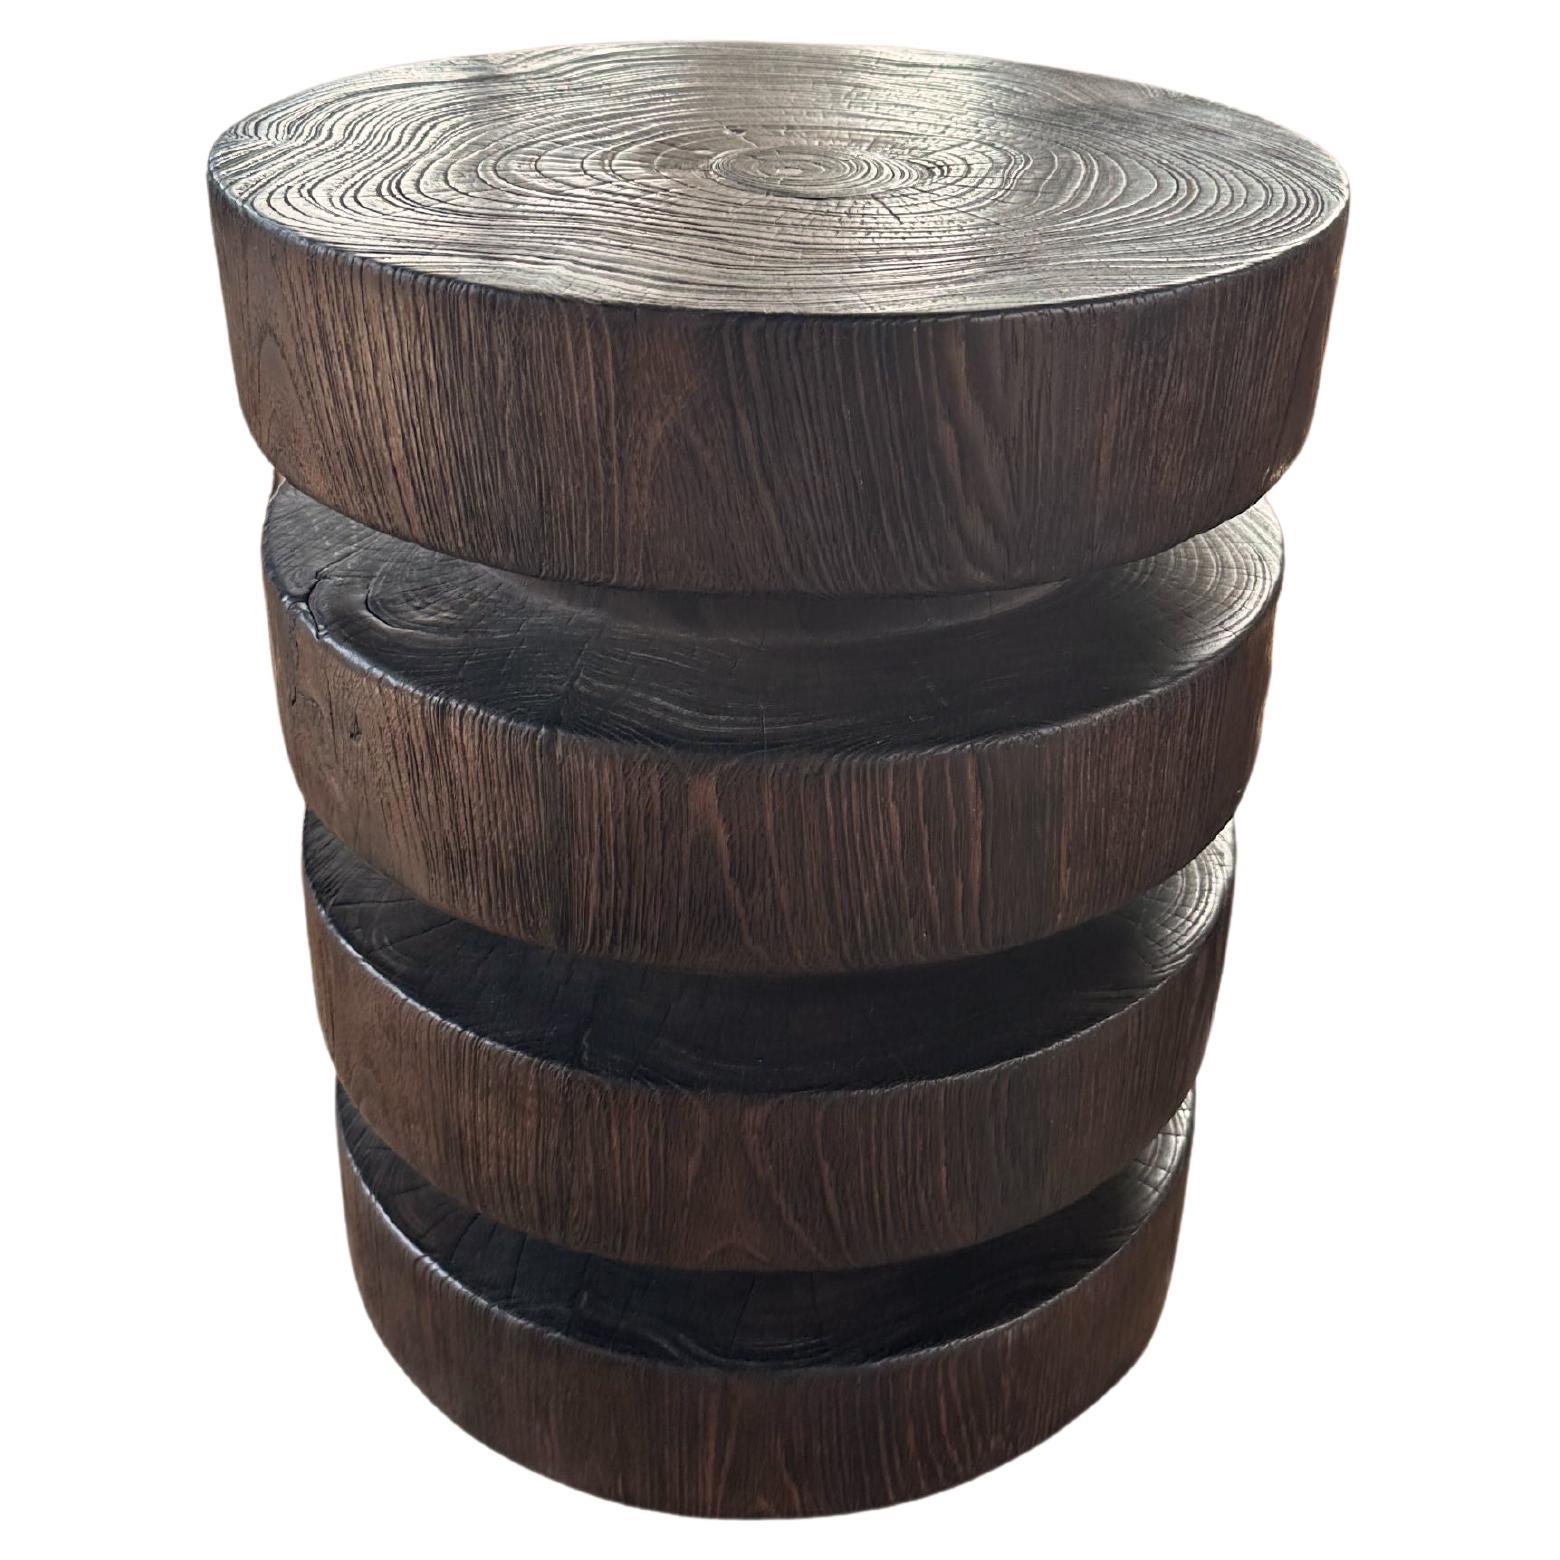 Round Teak Wood Side Table, Burnt Finish, Layered Design, Modern Organic